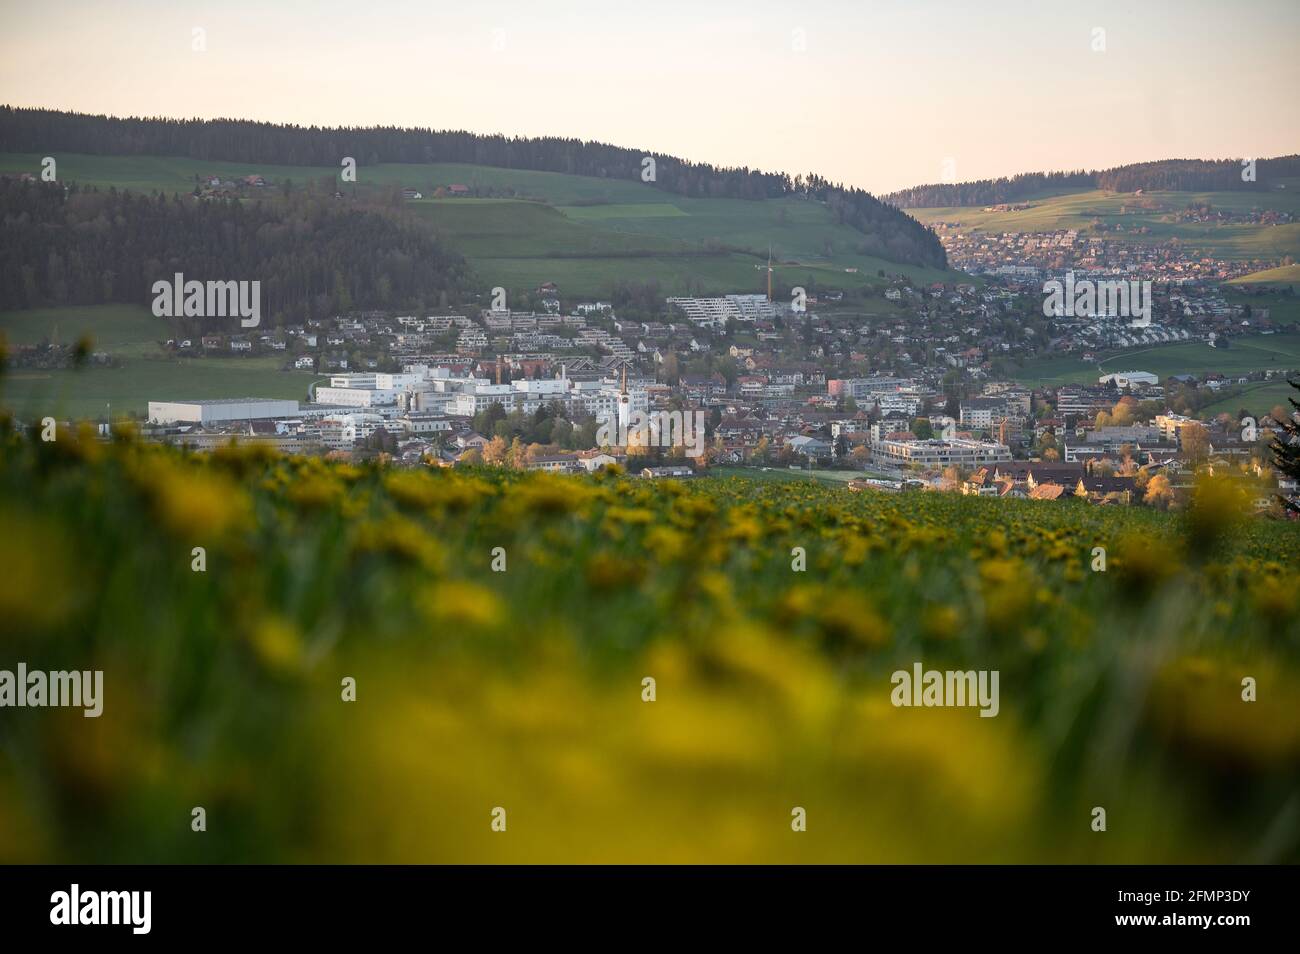 village of Konolfingen with a wildflower field in spring Stock Photo